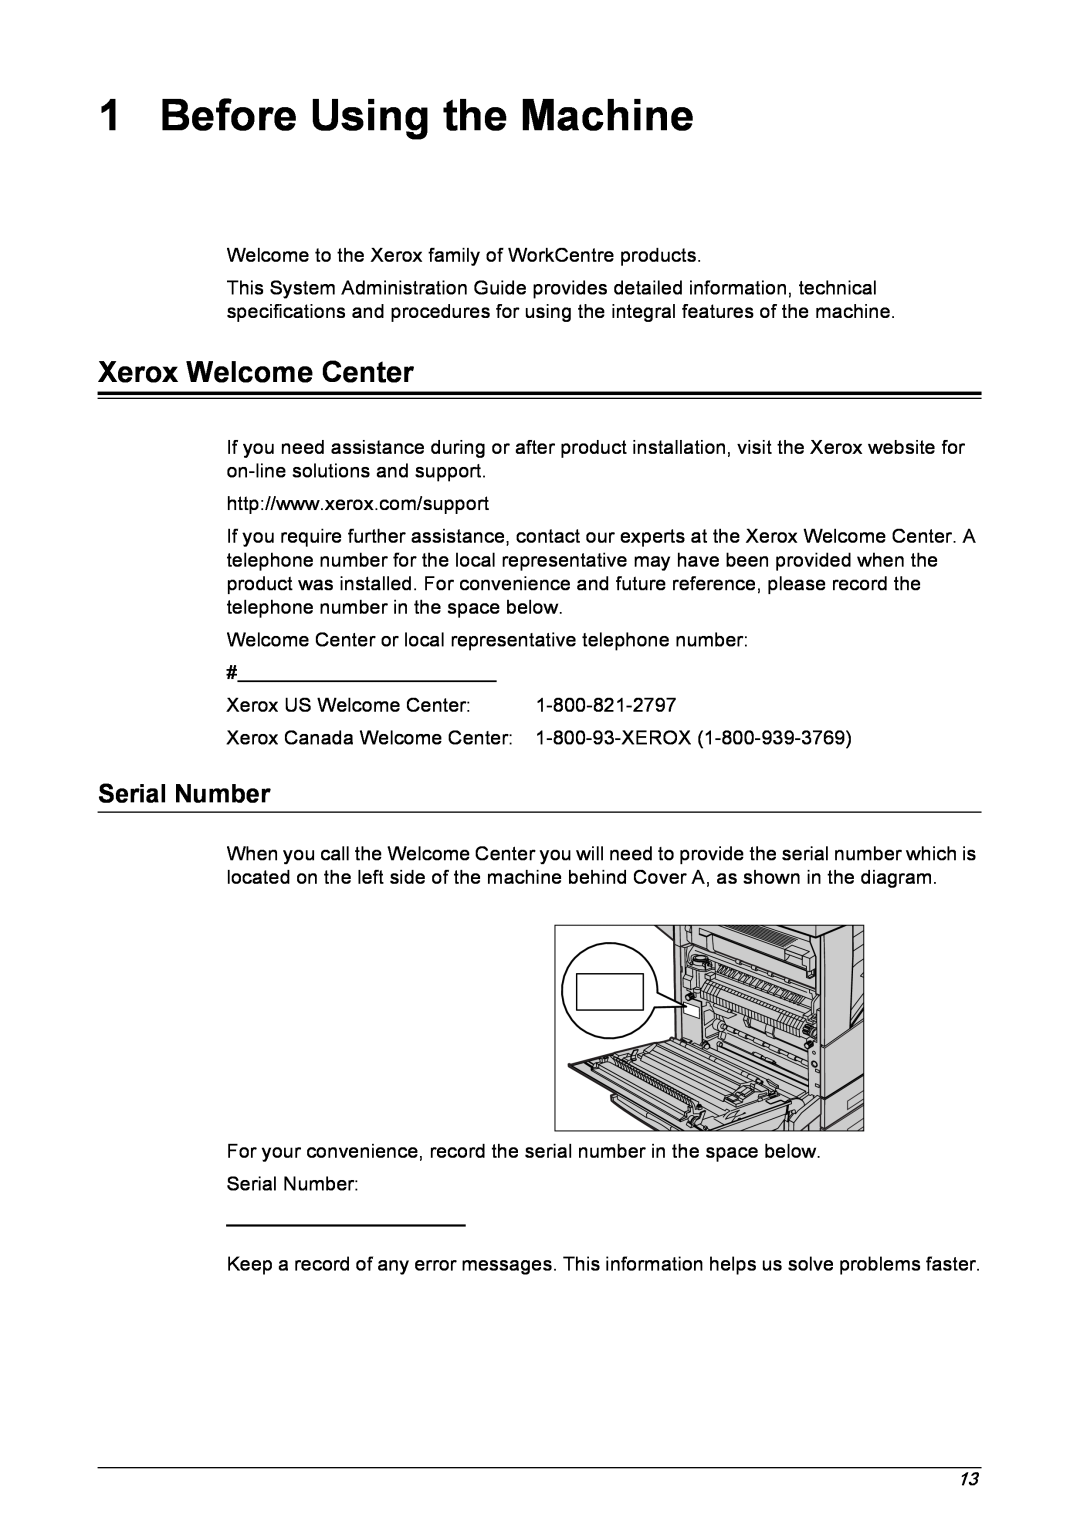 Xerox 5222 manual Before Using the Machine, Xerox Welcome Center, Serial Number 